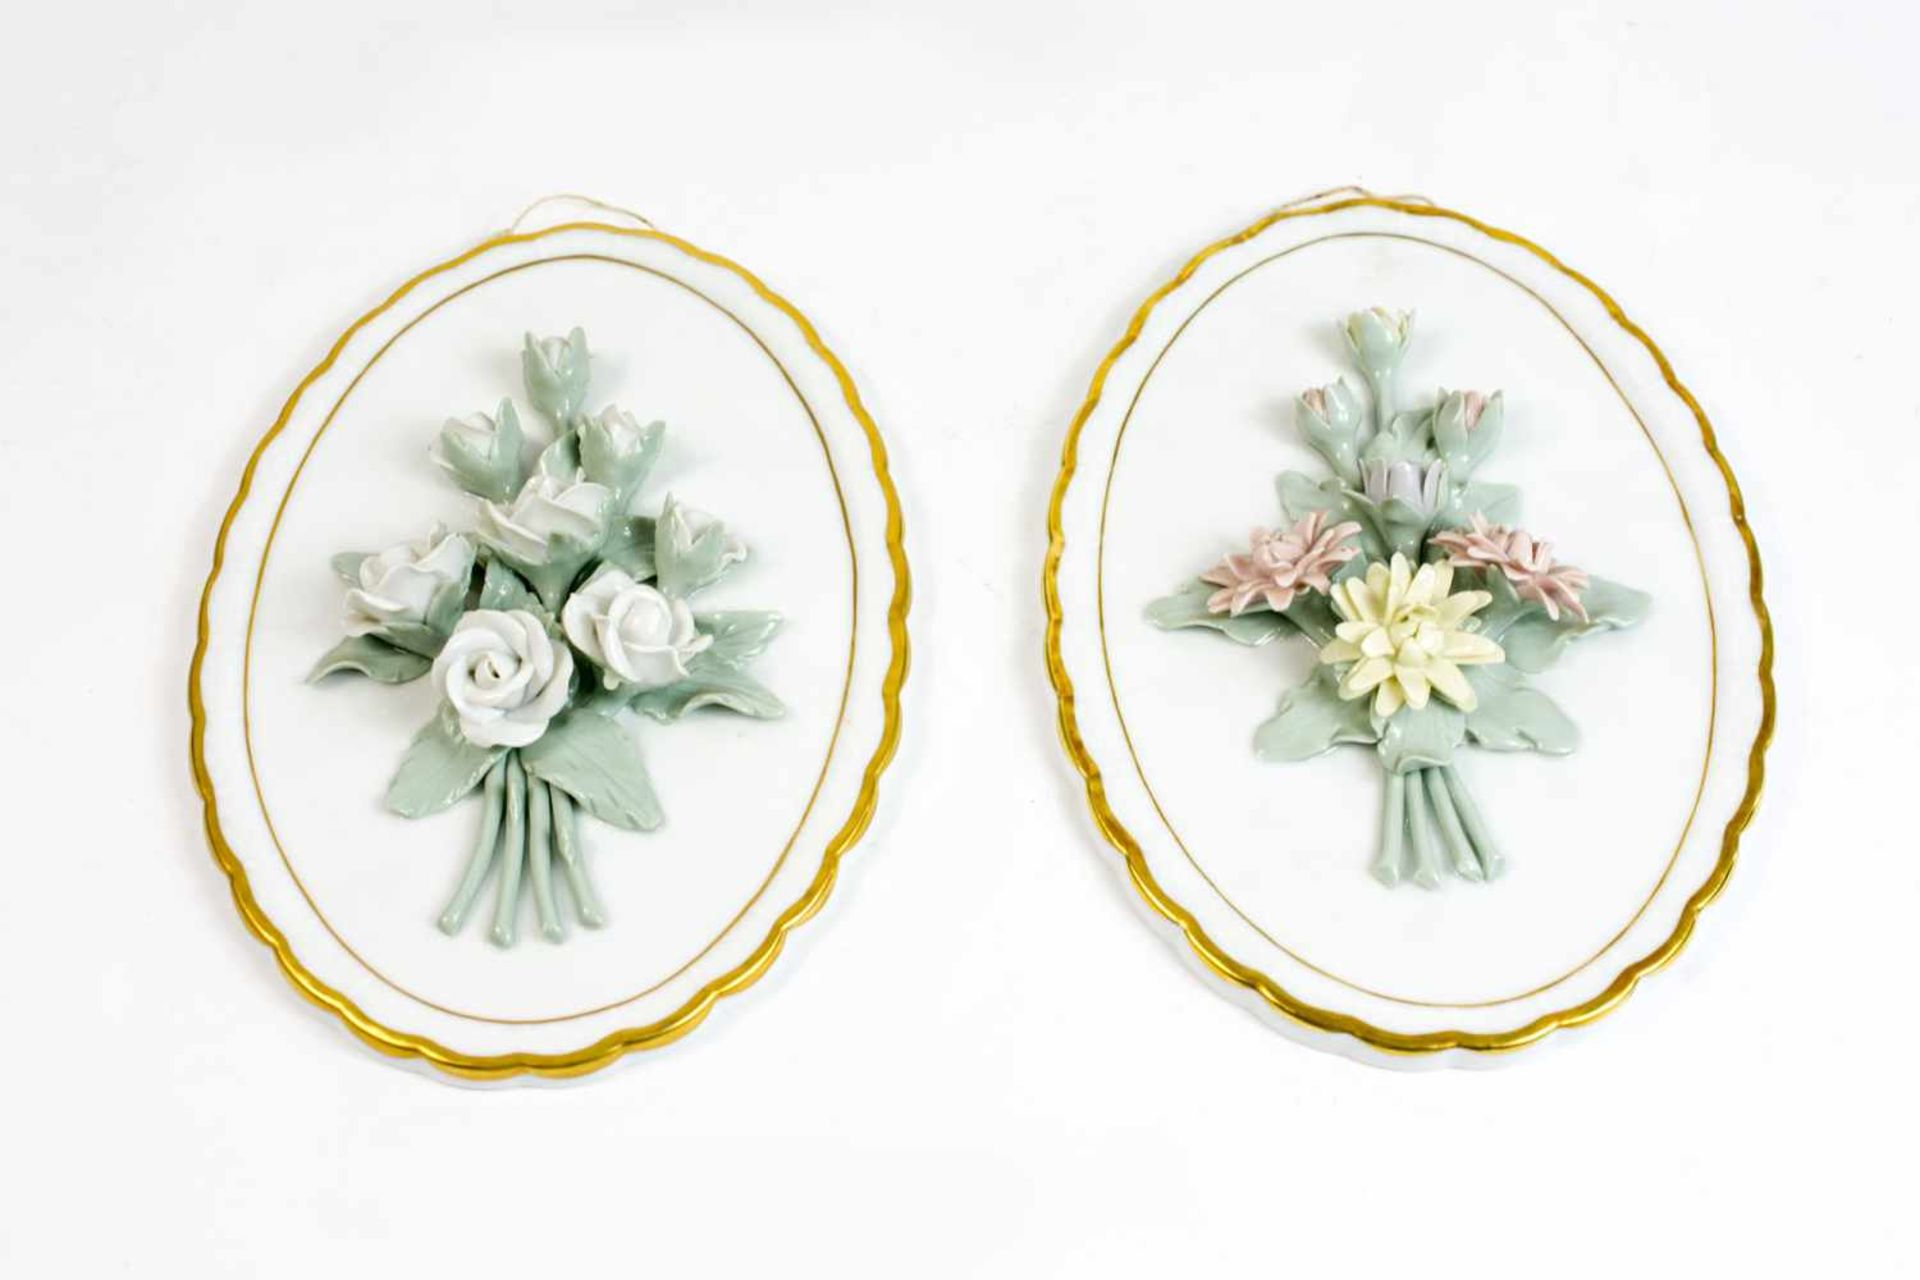 Paar Wandteller Herend, 20. Jh., Porzellan, weiß, farbig staffiert, reliefierte Blumen, Höhe 19,5